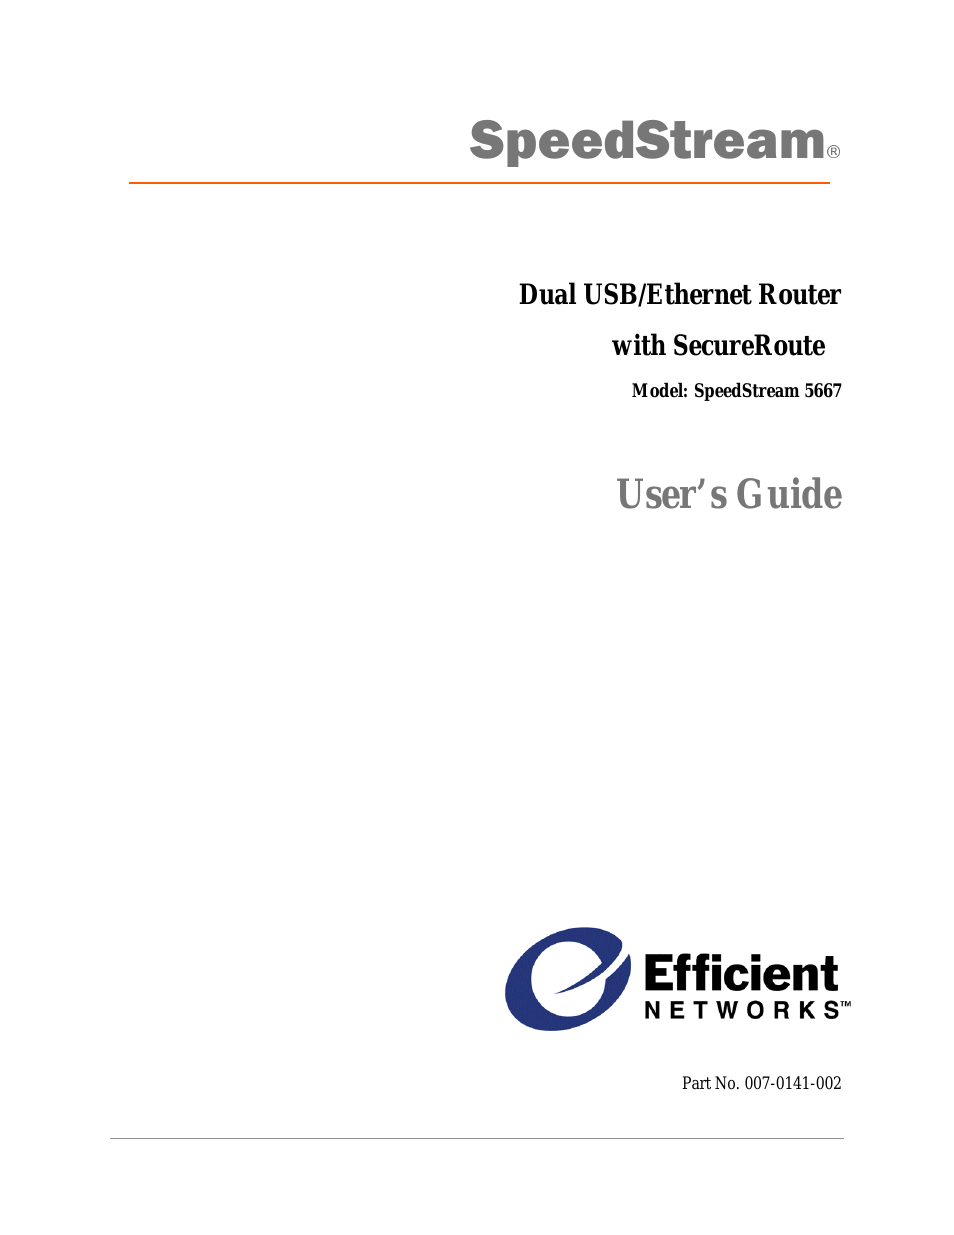 SpeedStream 5667